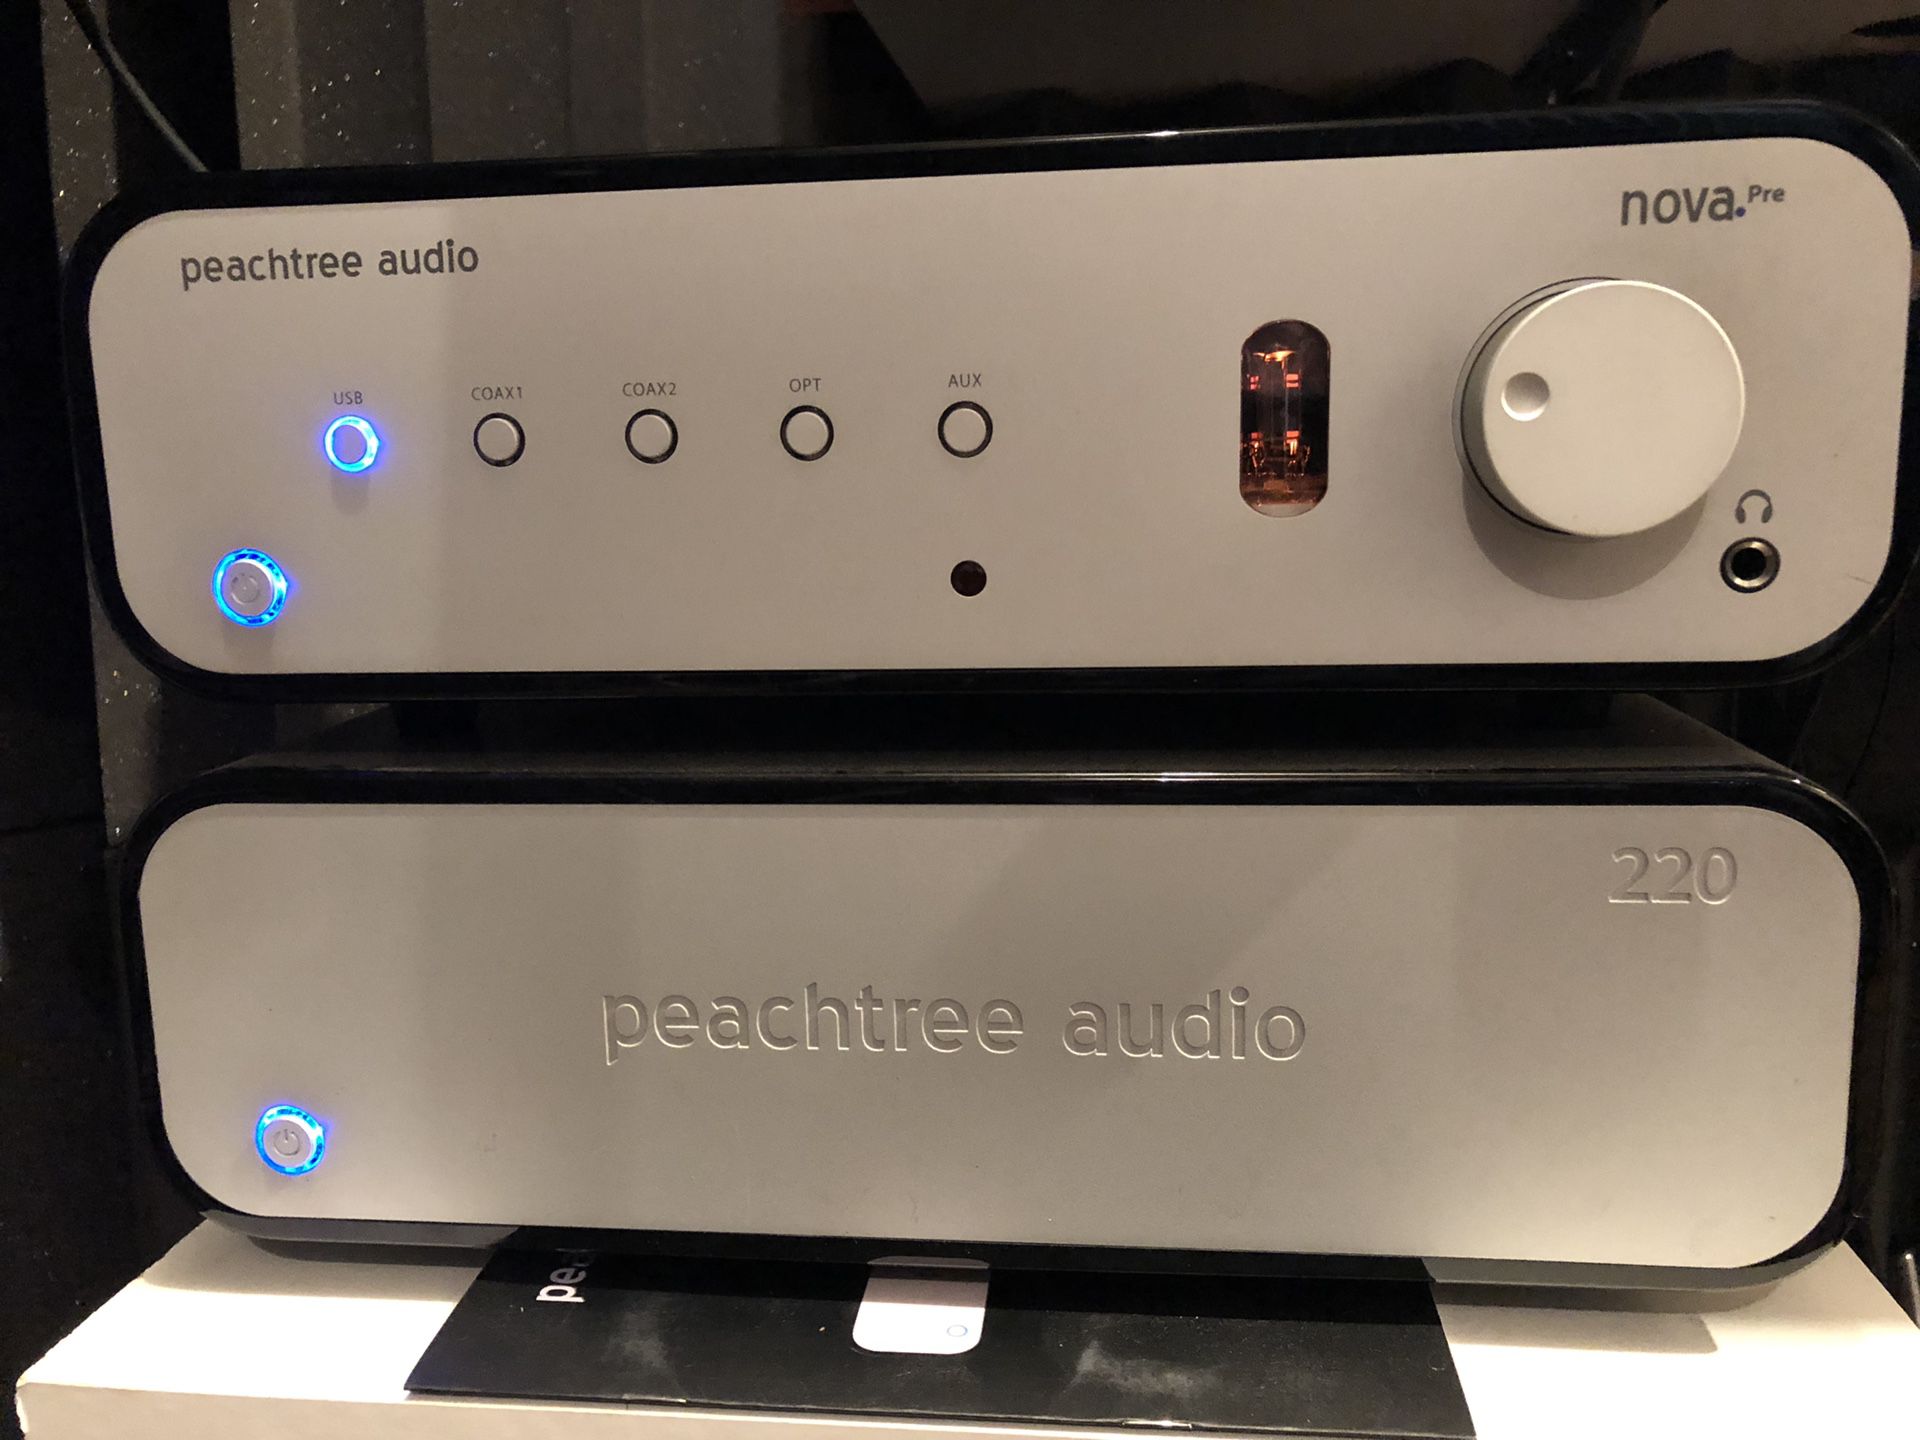 Peachtree Audio Pro Nova Pre Amplifier & bonus 220 Power Amp included